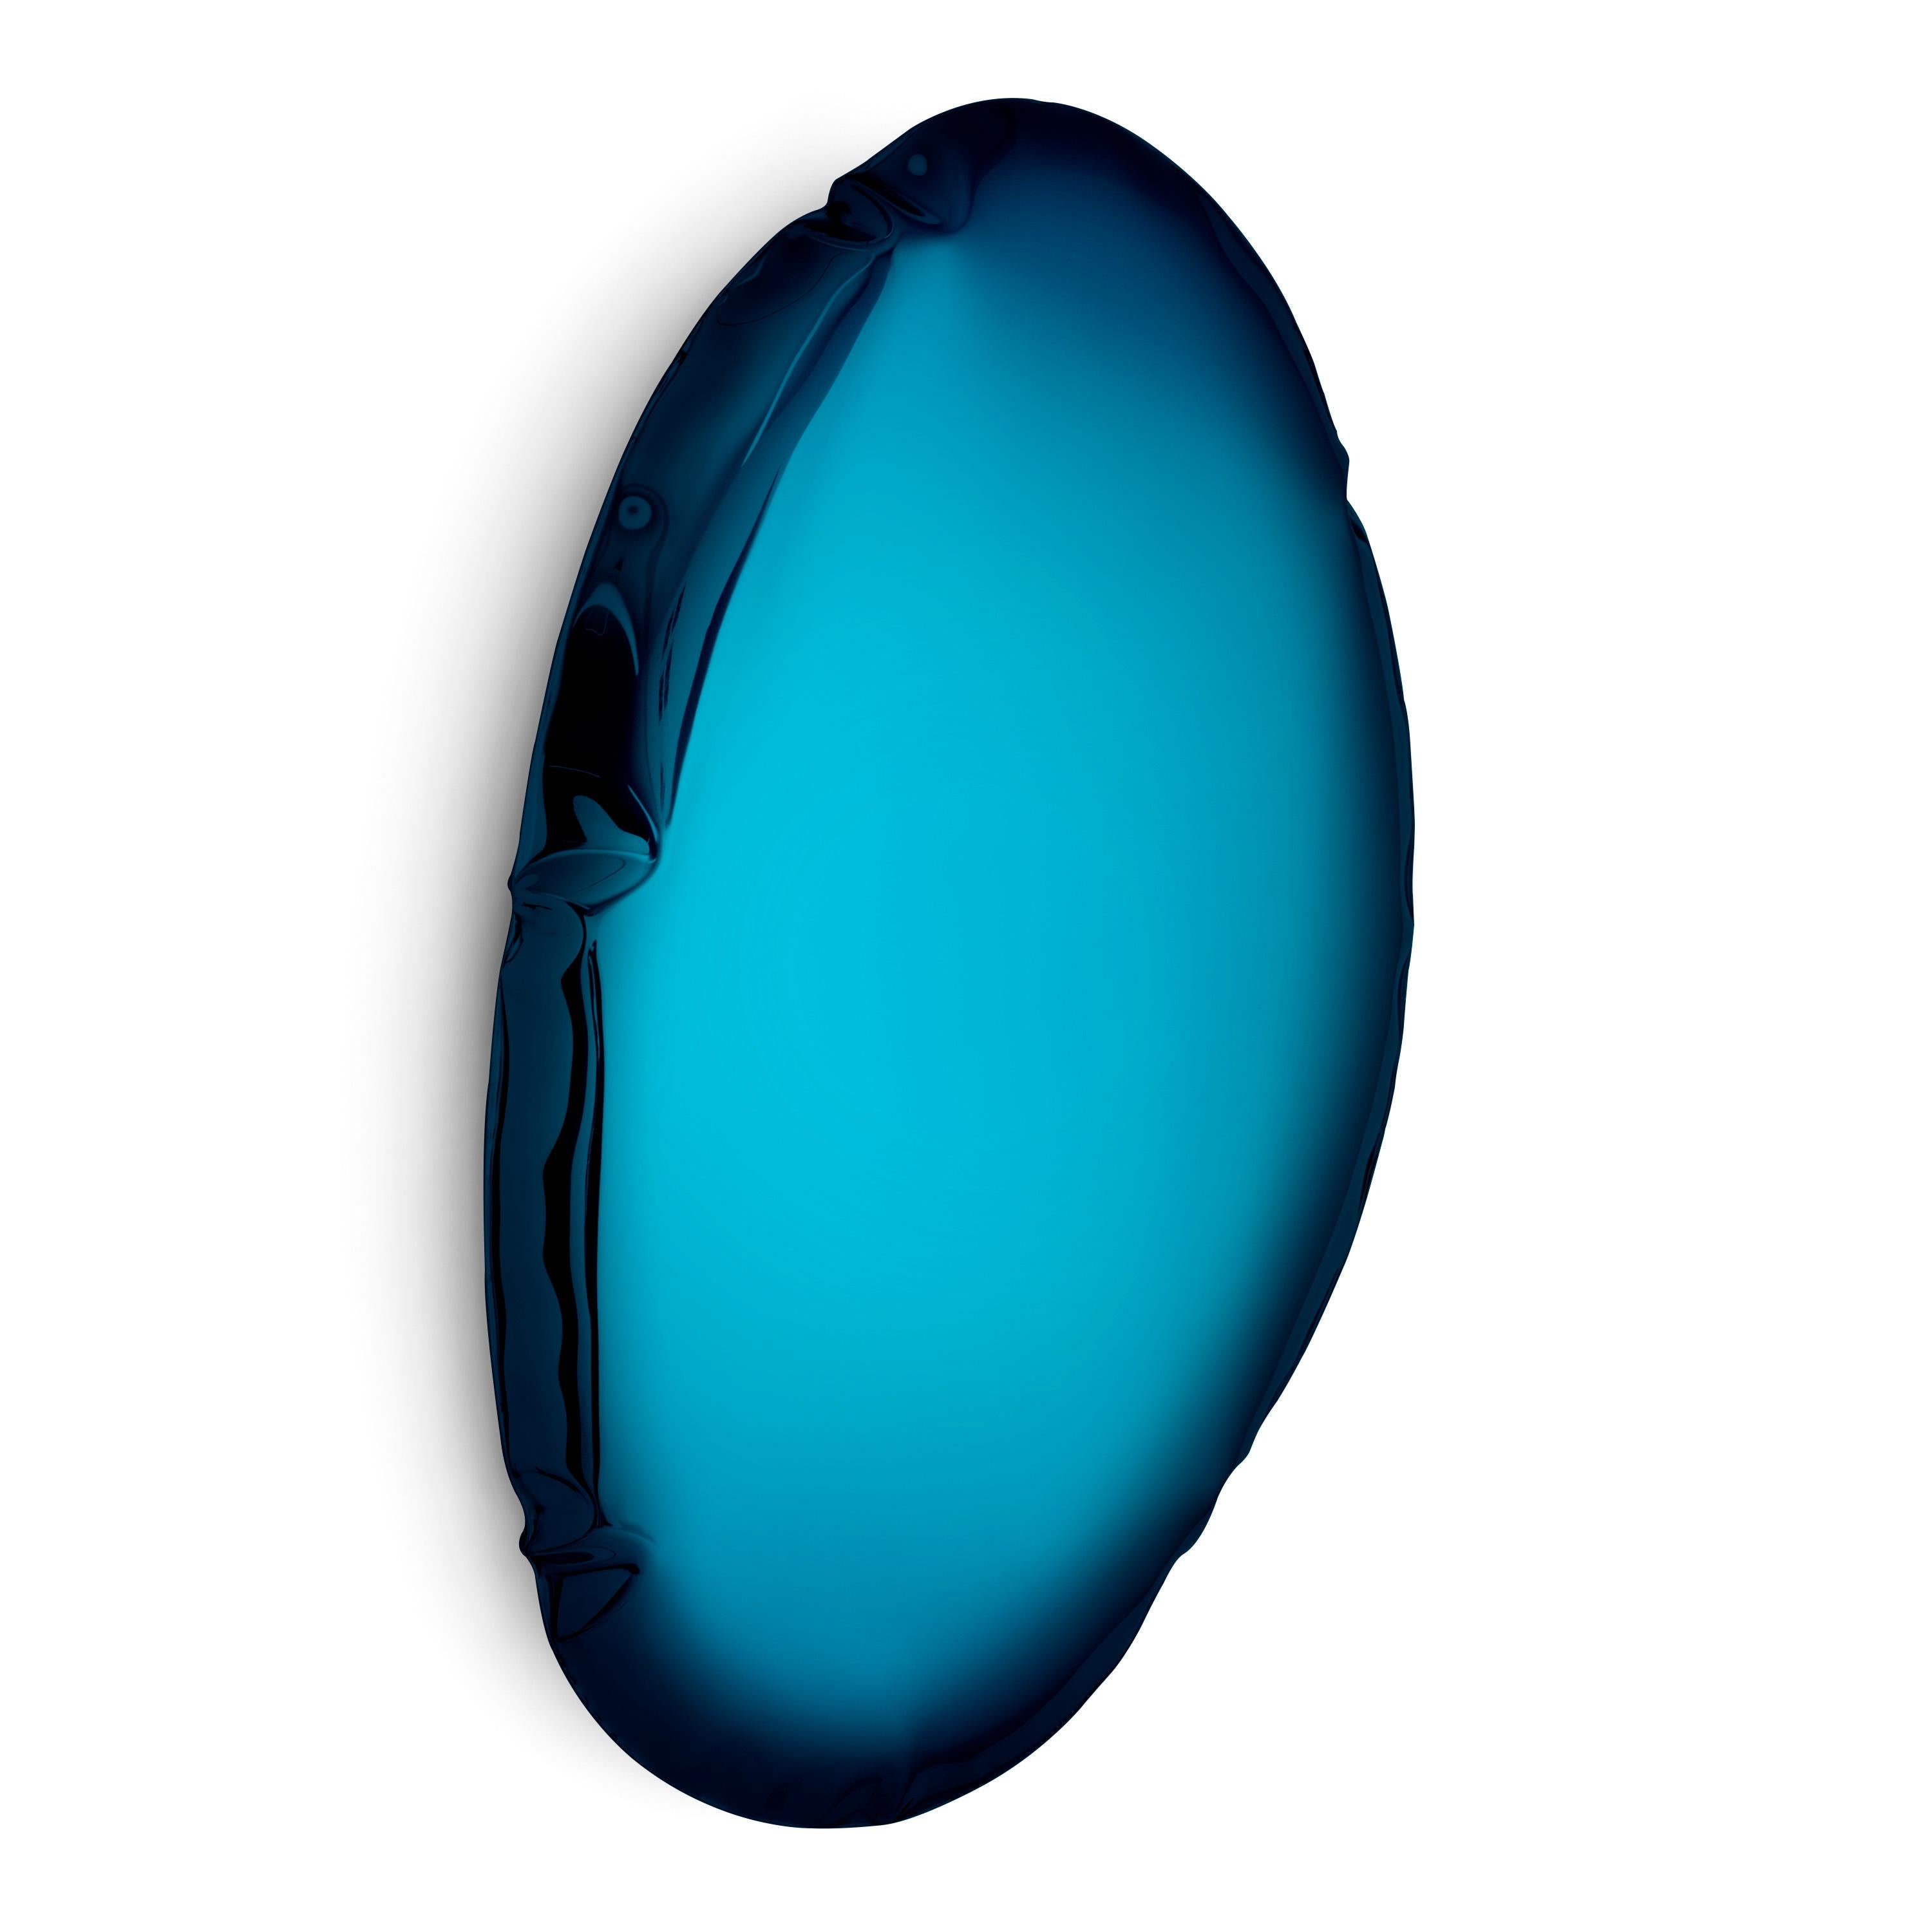 Deep Space Blue Tafla O5 wall mirror by Zieta
Dimensions: D 6 x W 40 x H 60 cm 
Material: Stainless steel.
Finish: Deep Space Blue.
Available finishes: Stainless Steel, White Matt, Sapphire/Emerald, Sapphire, Emerald, Deep space blue, Dark matter,